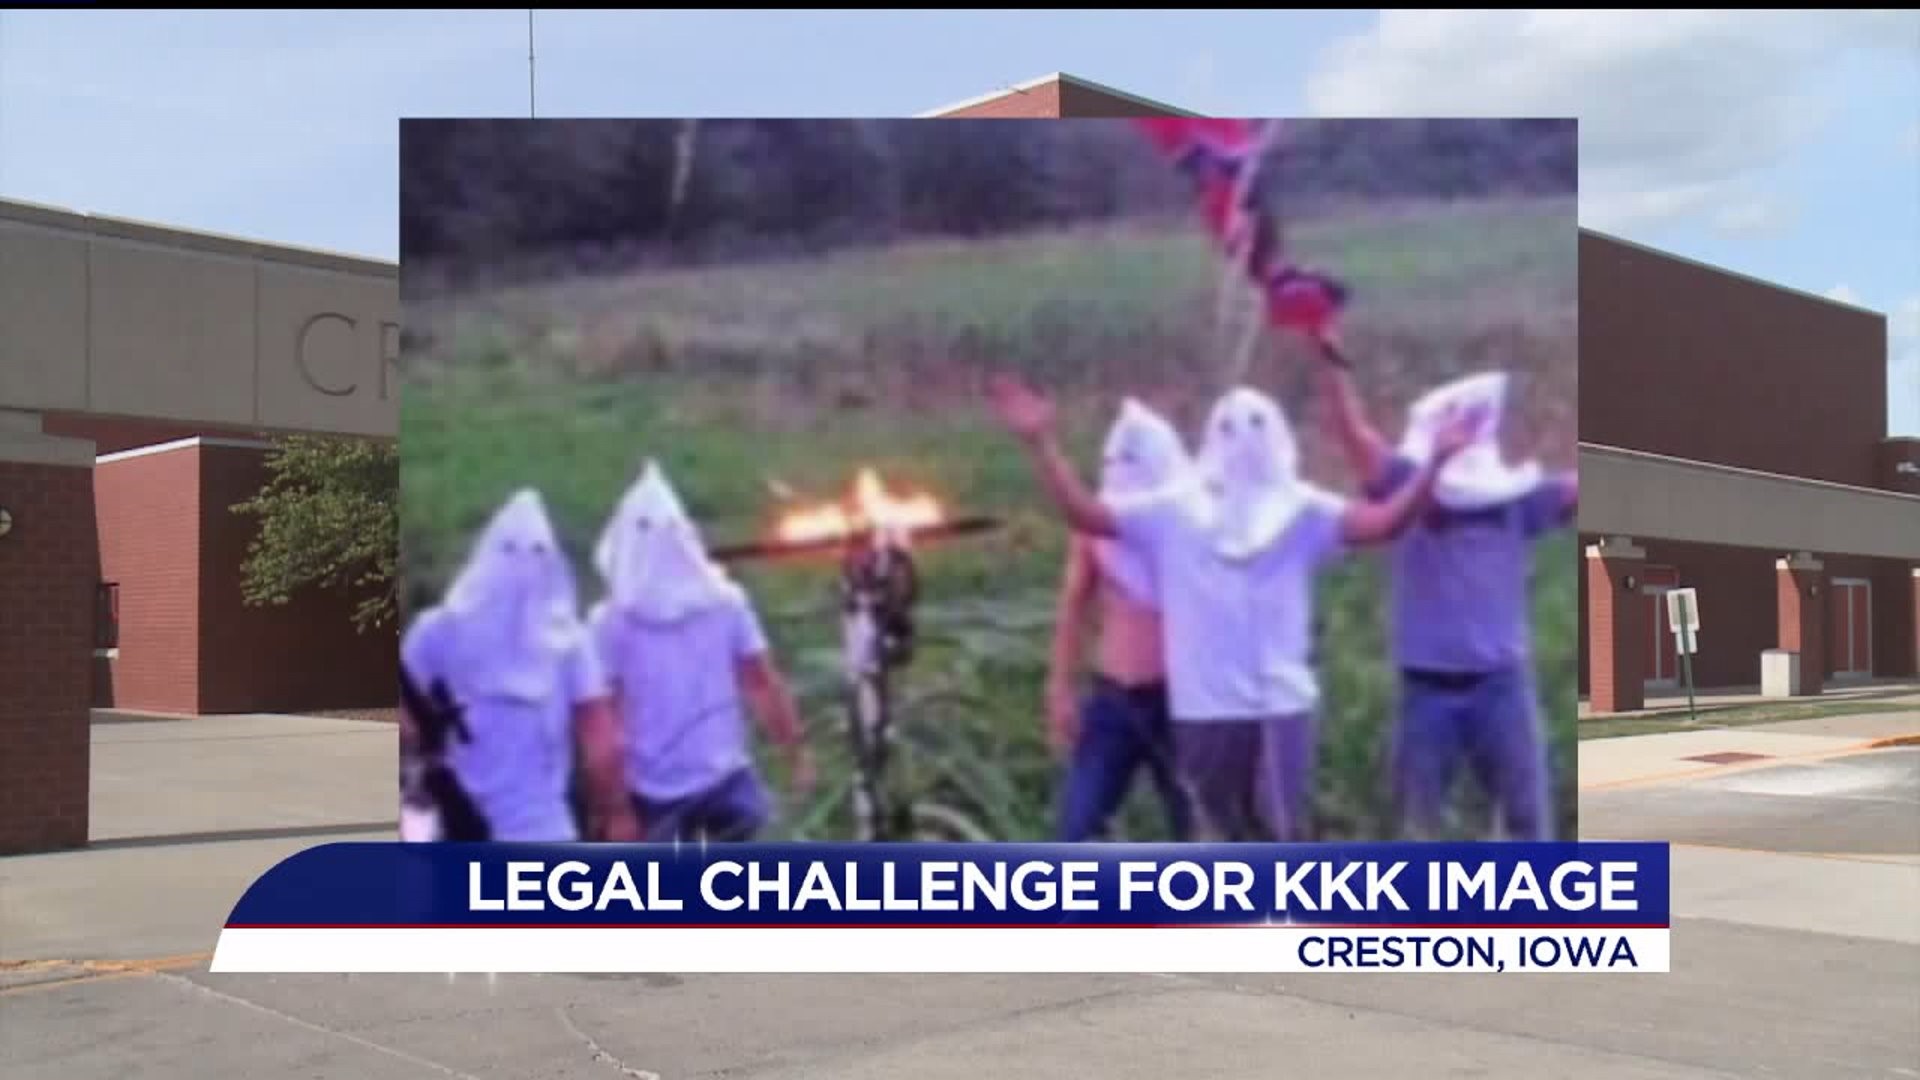 KKK photo ignites controversy, legal battle